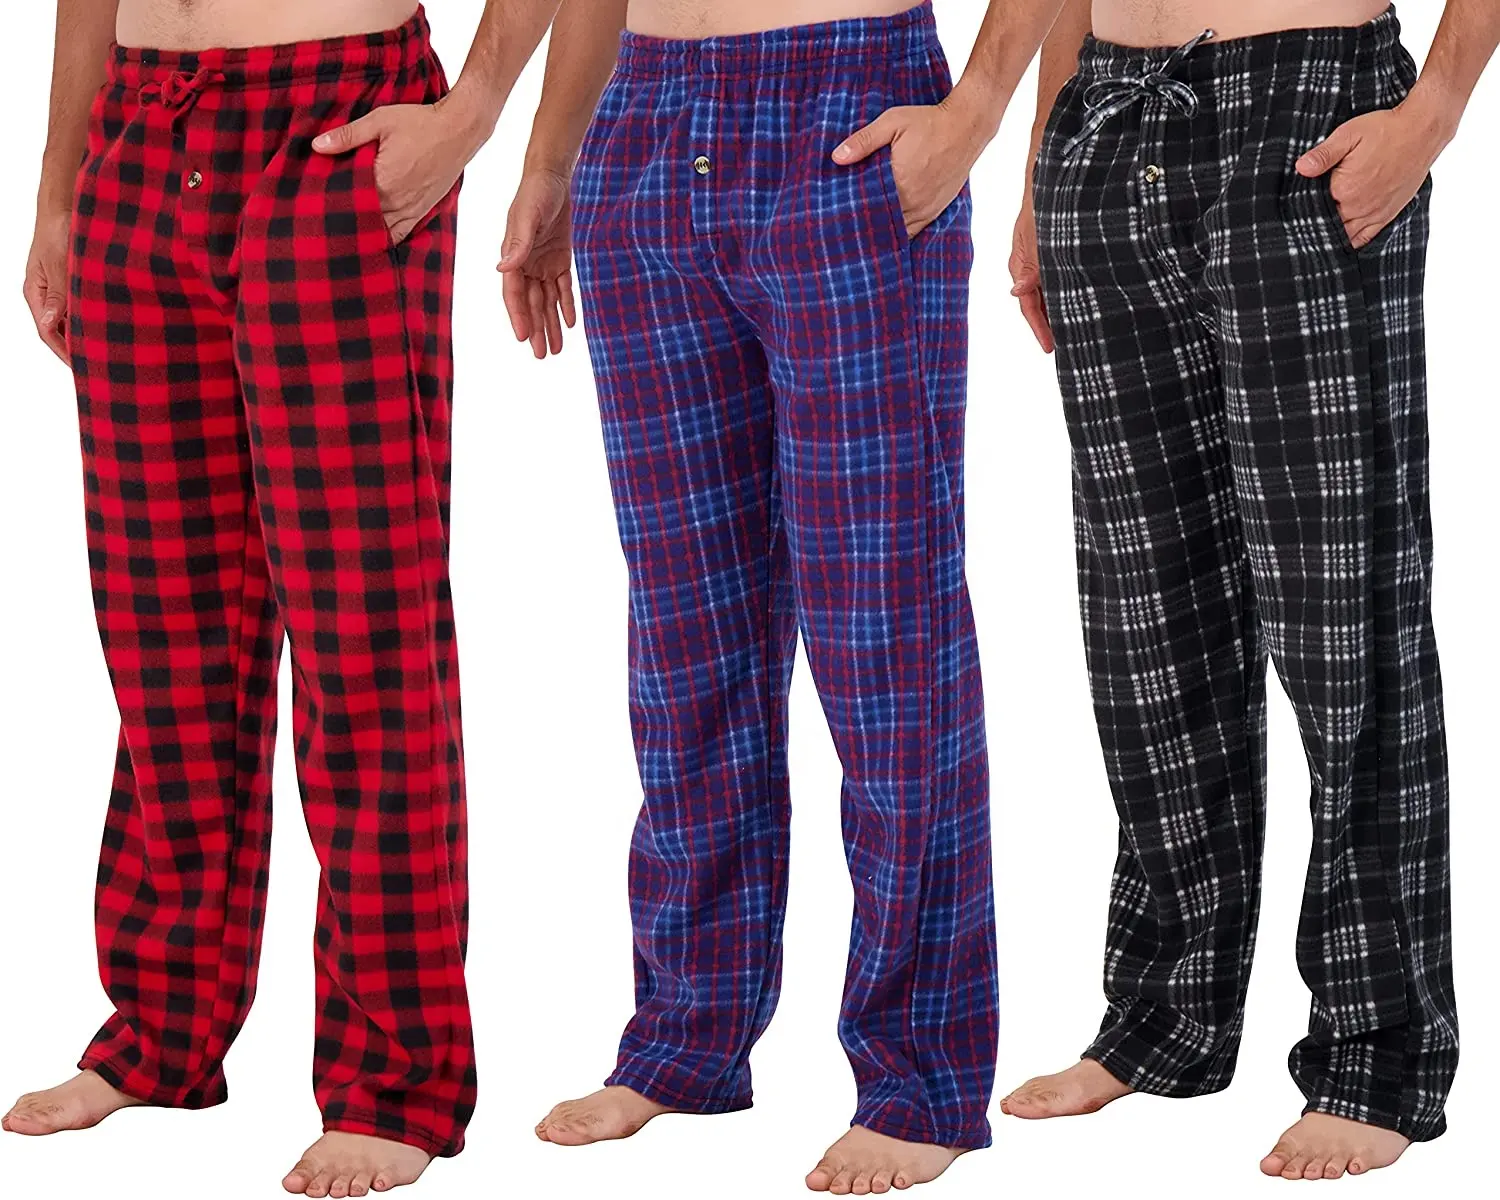 Wholesale High Quality Men's Polyester Sleepwear Pajama Pants OEM